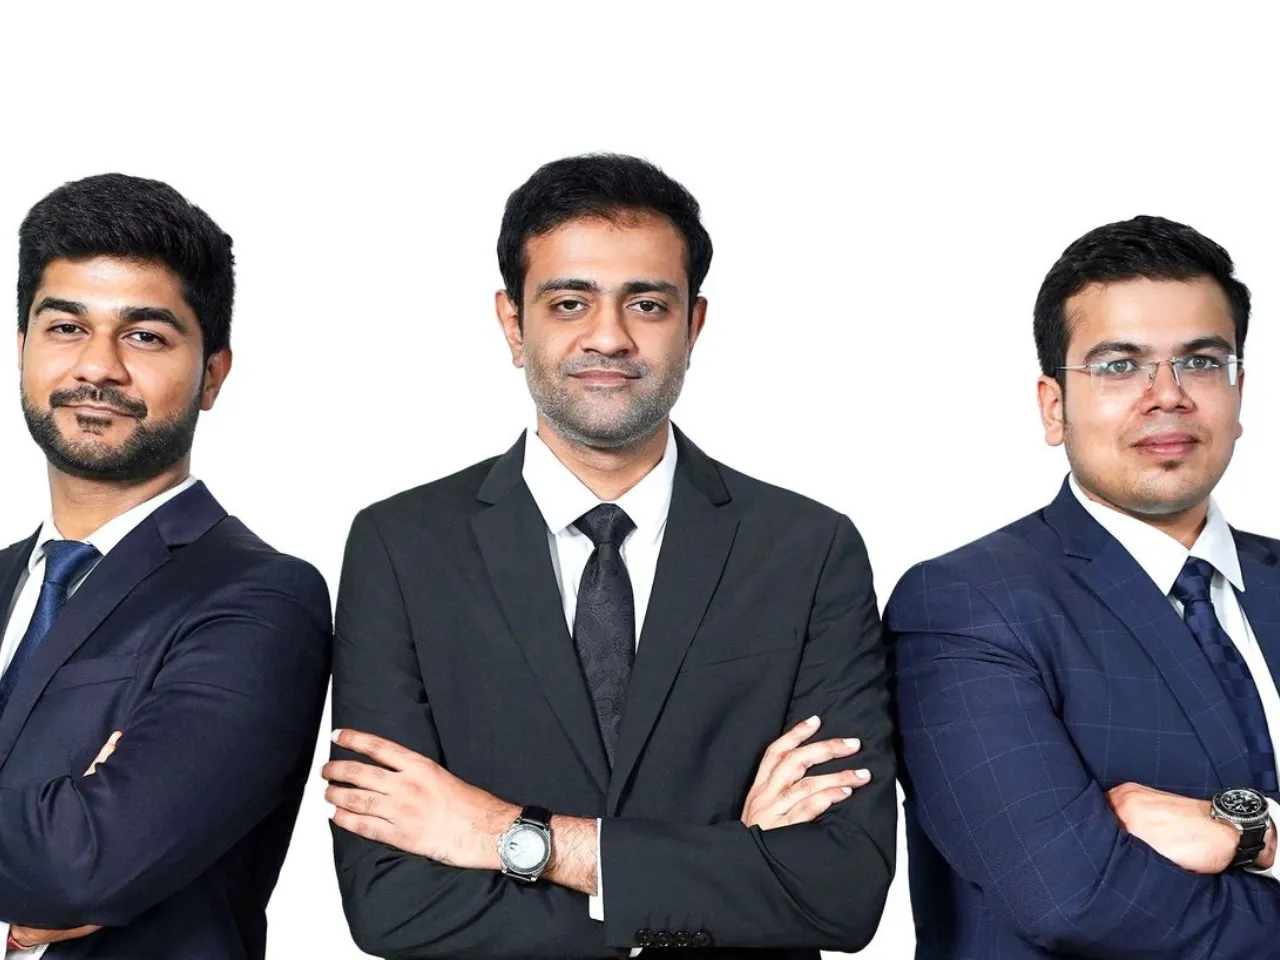  Credgenics Founders - Anand Agarwal, Rishabh Goel, and Mayank Khera